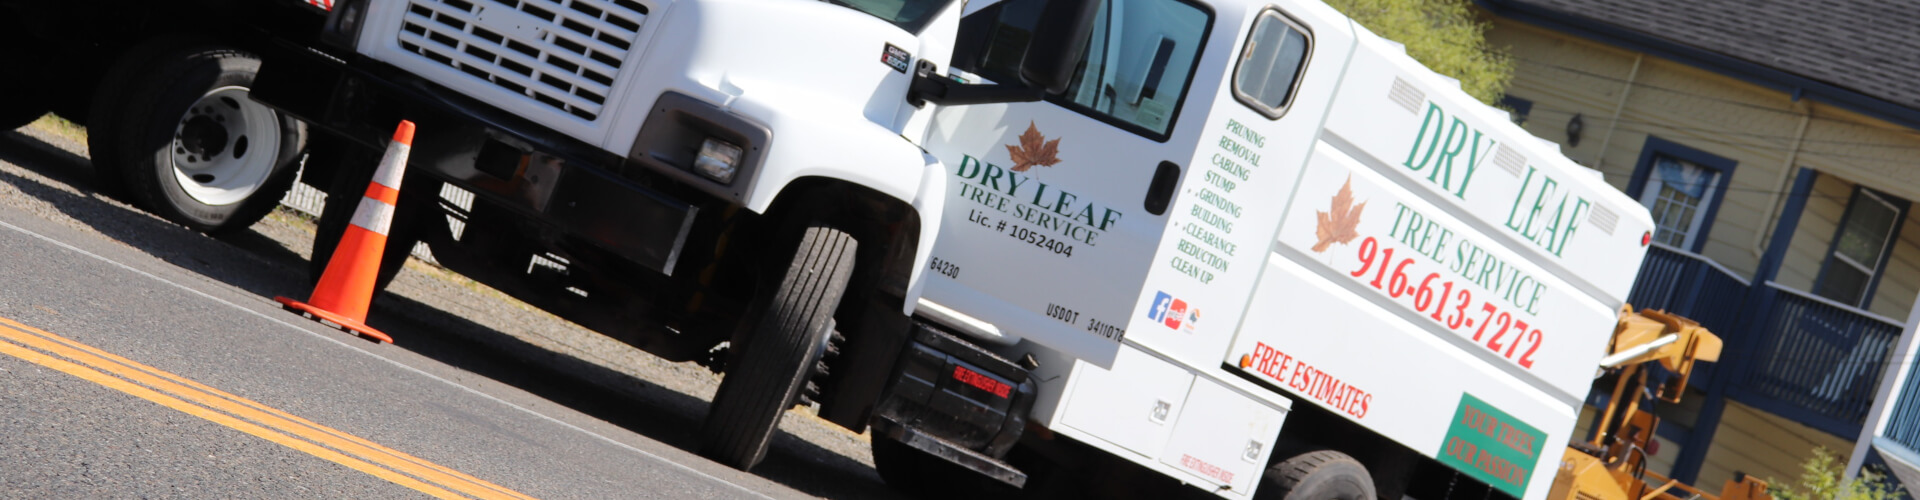 Dry Leaf Tree Service - Event Management Services